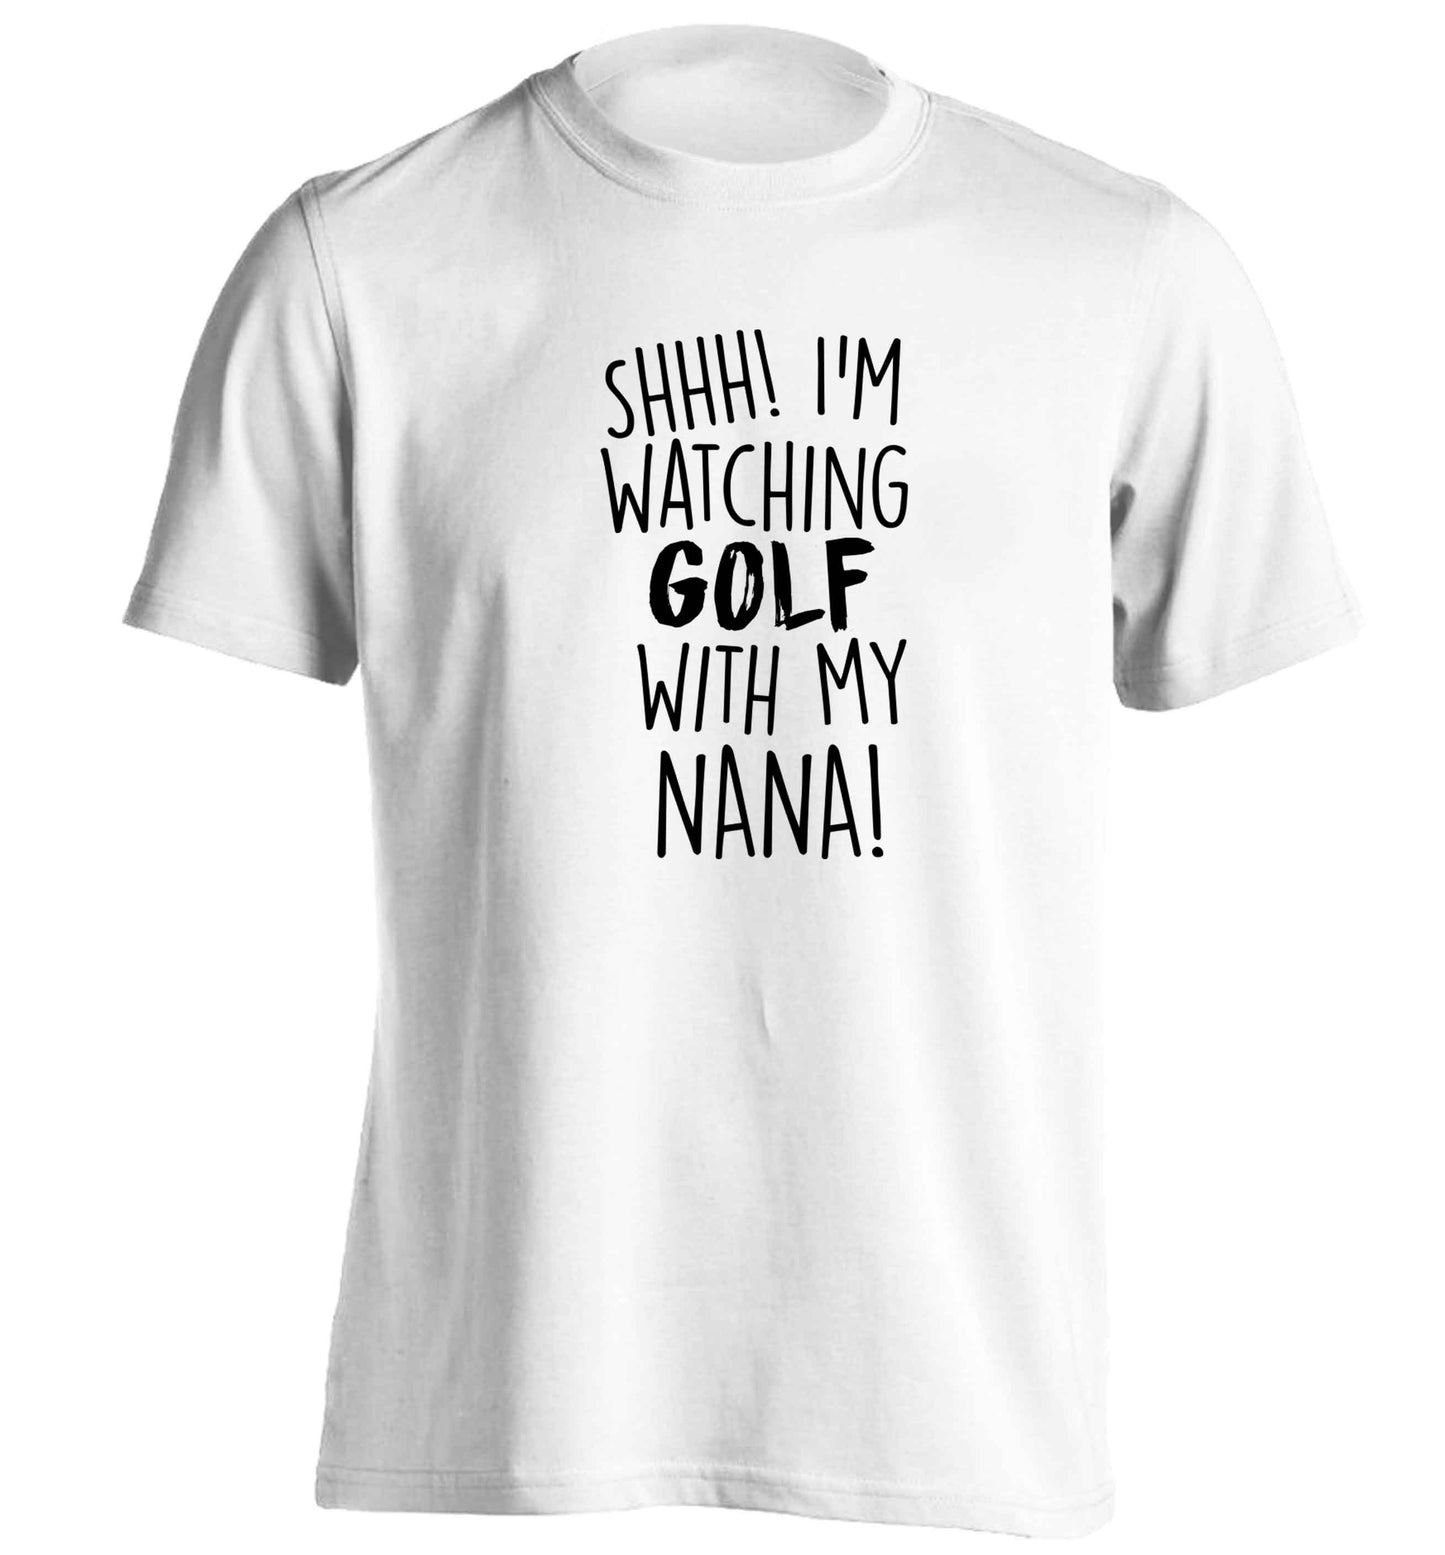 Shh I'm watching golf with my nana adults unisex white Tshirt 2XL